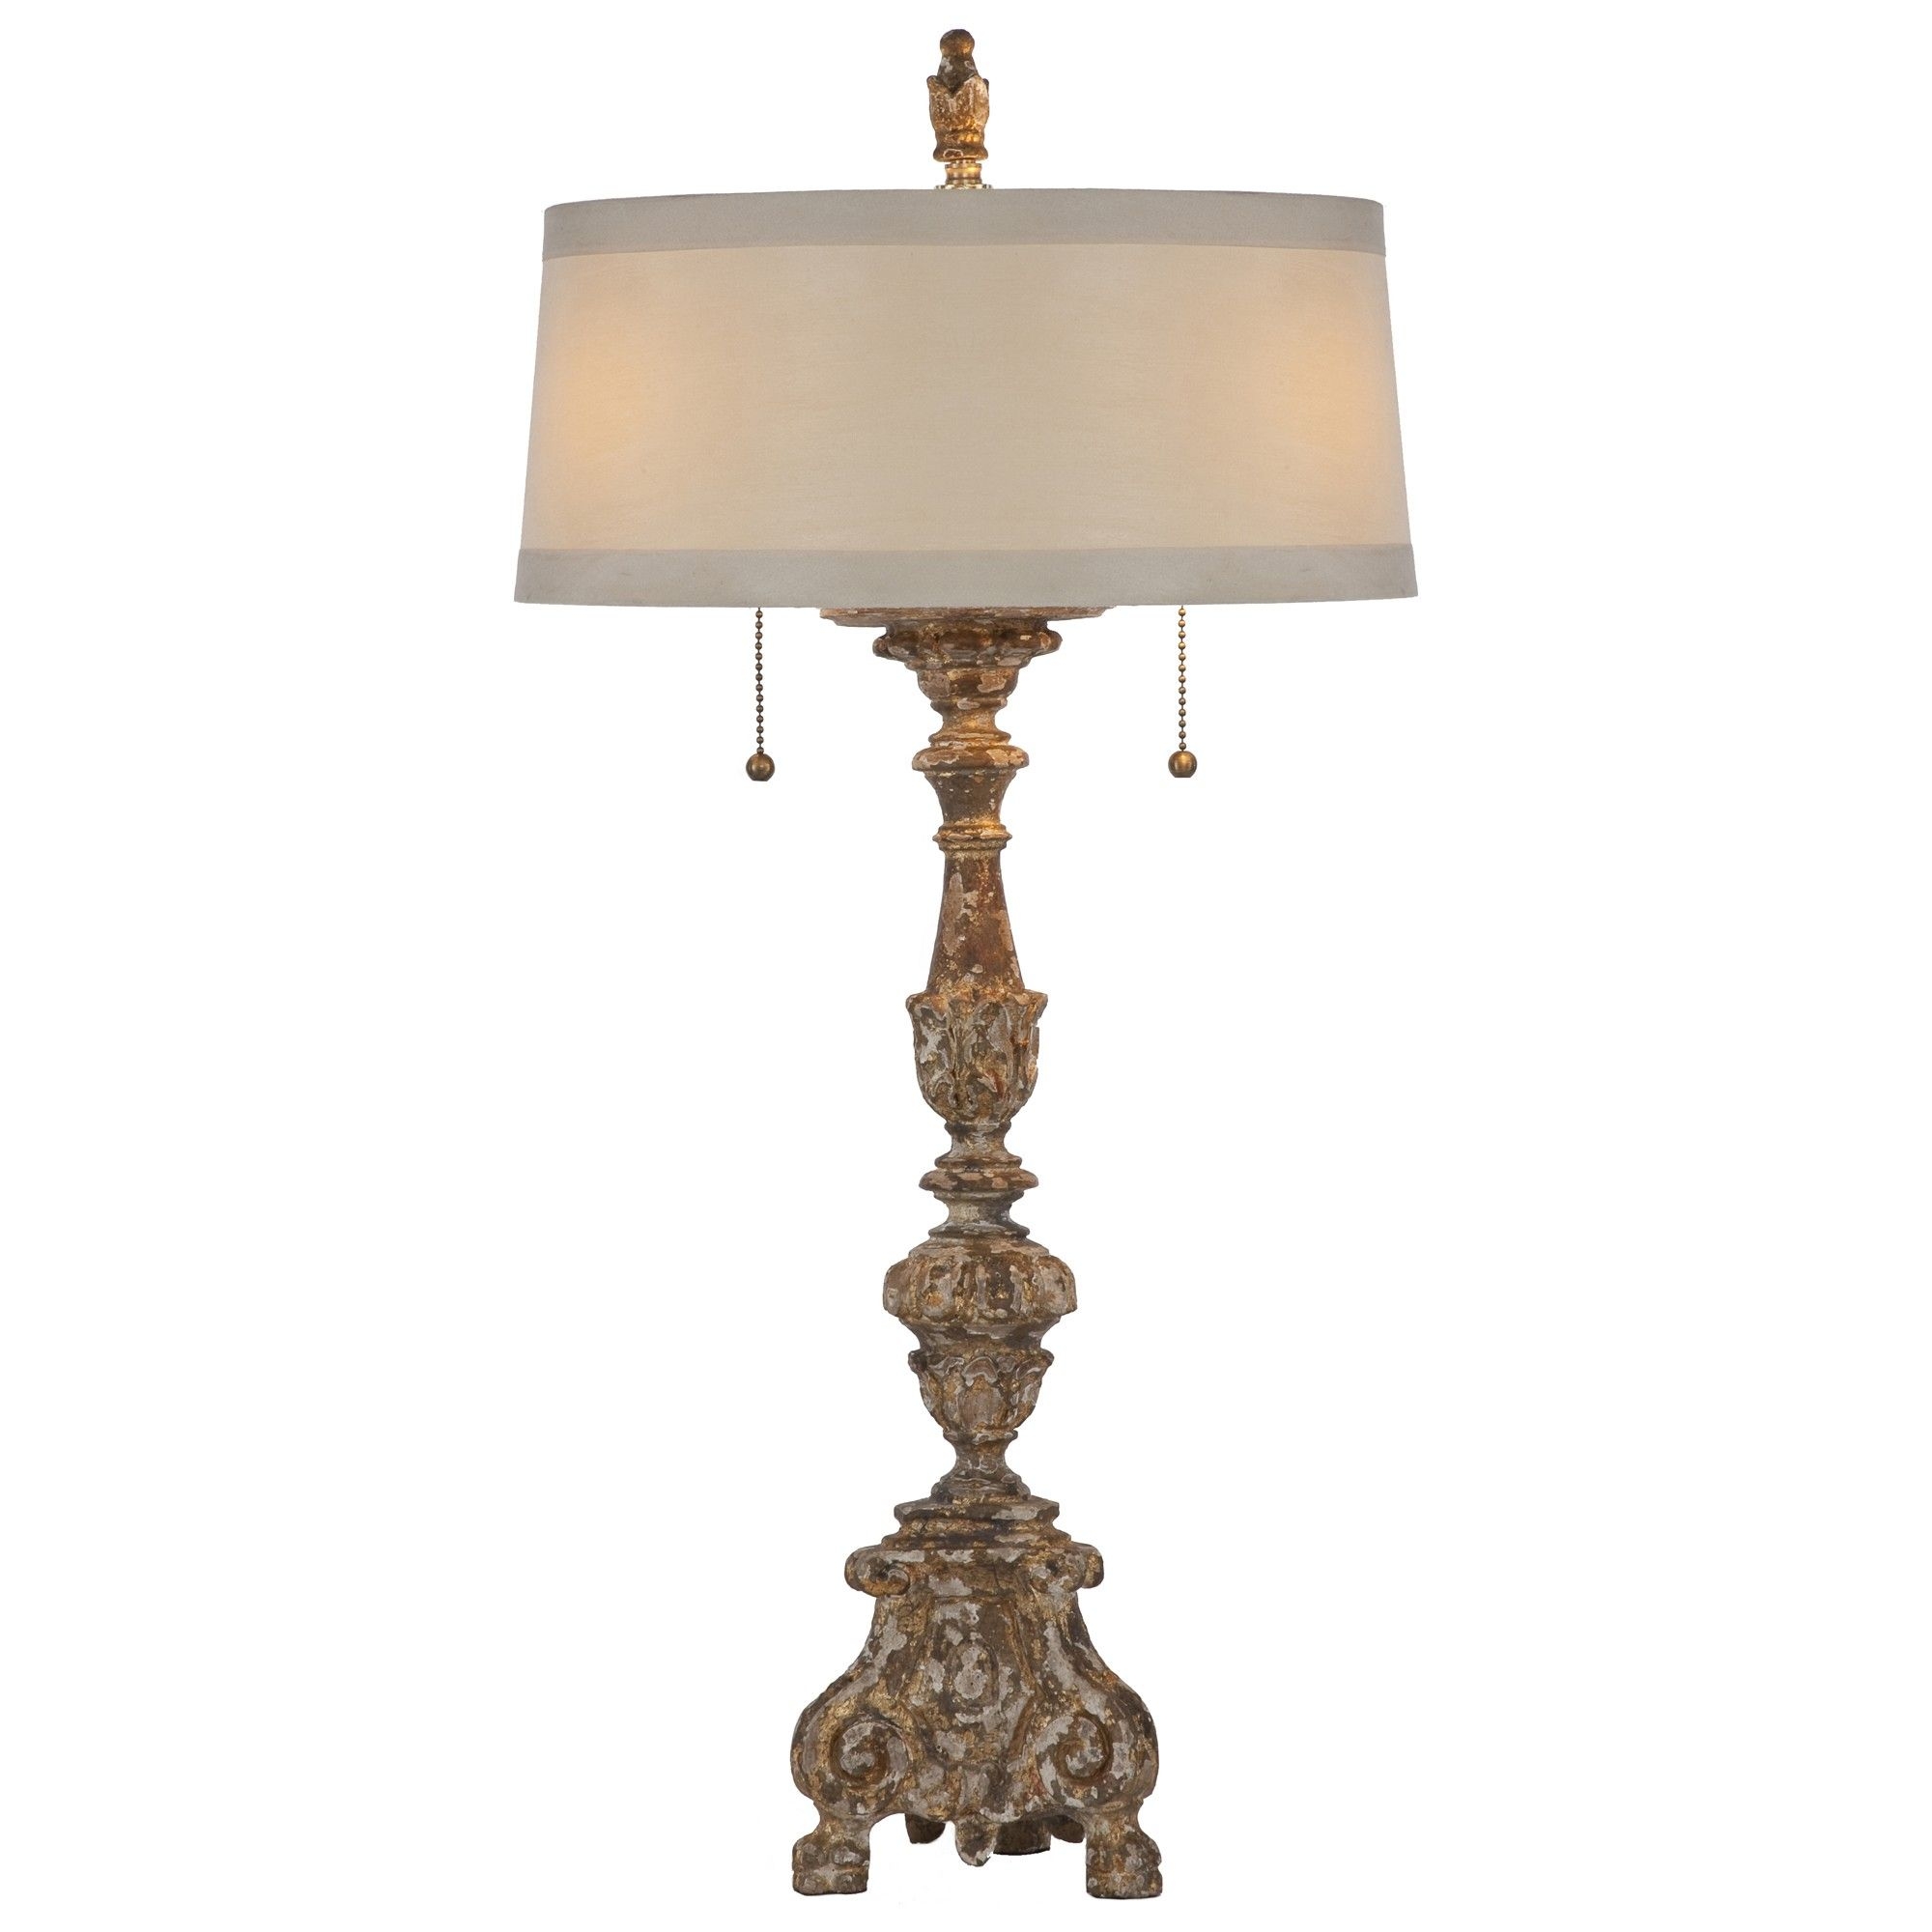 Tuscany table lamp 36